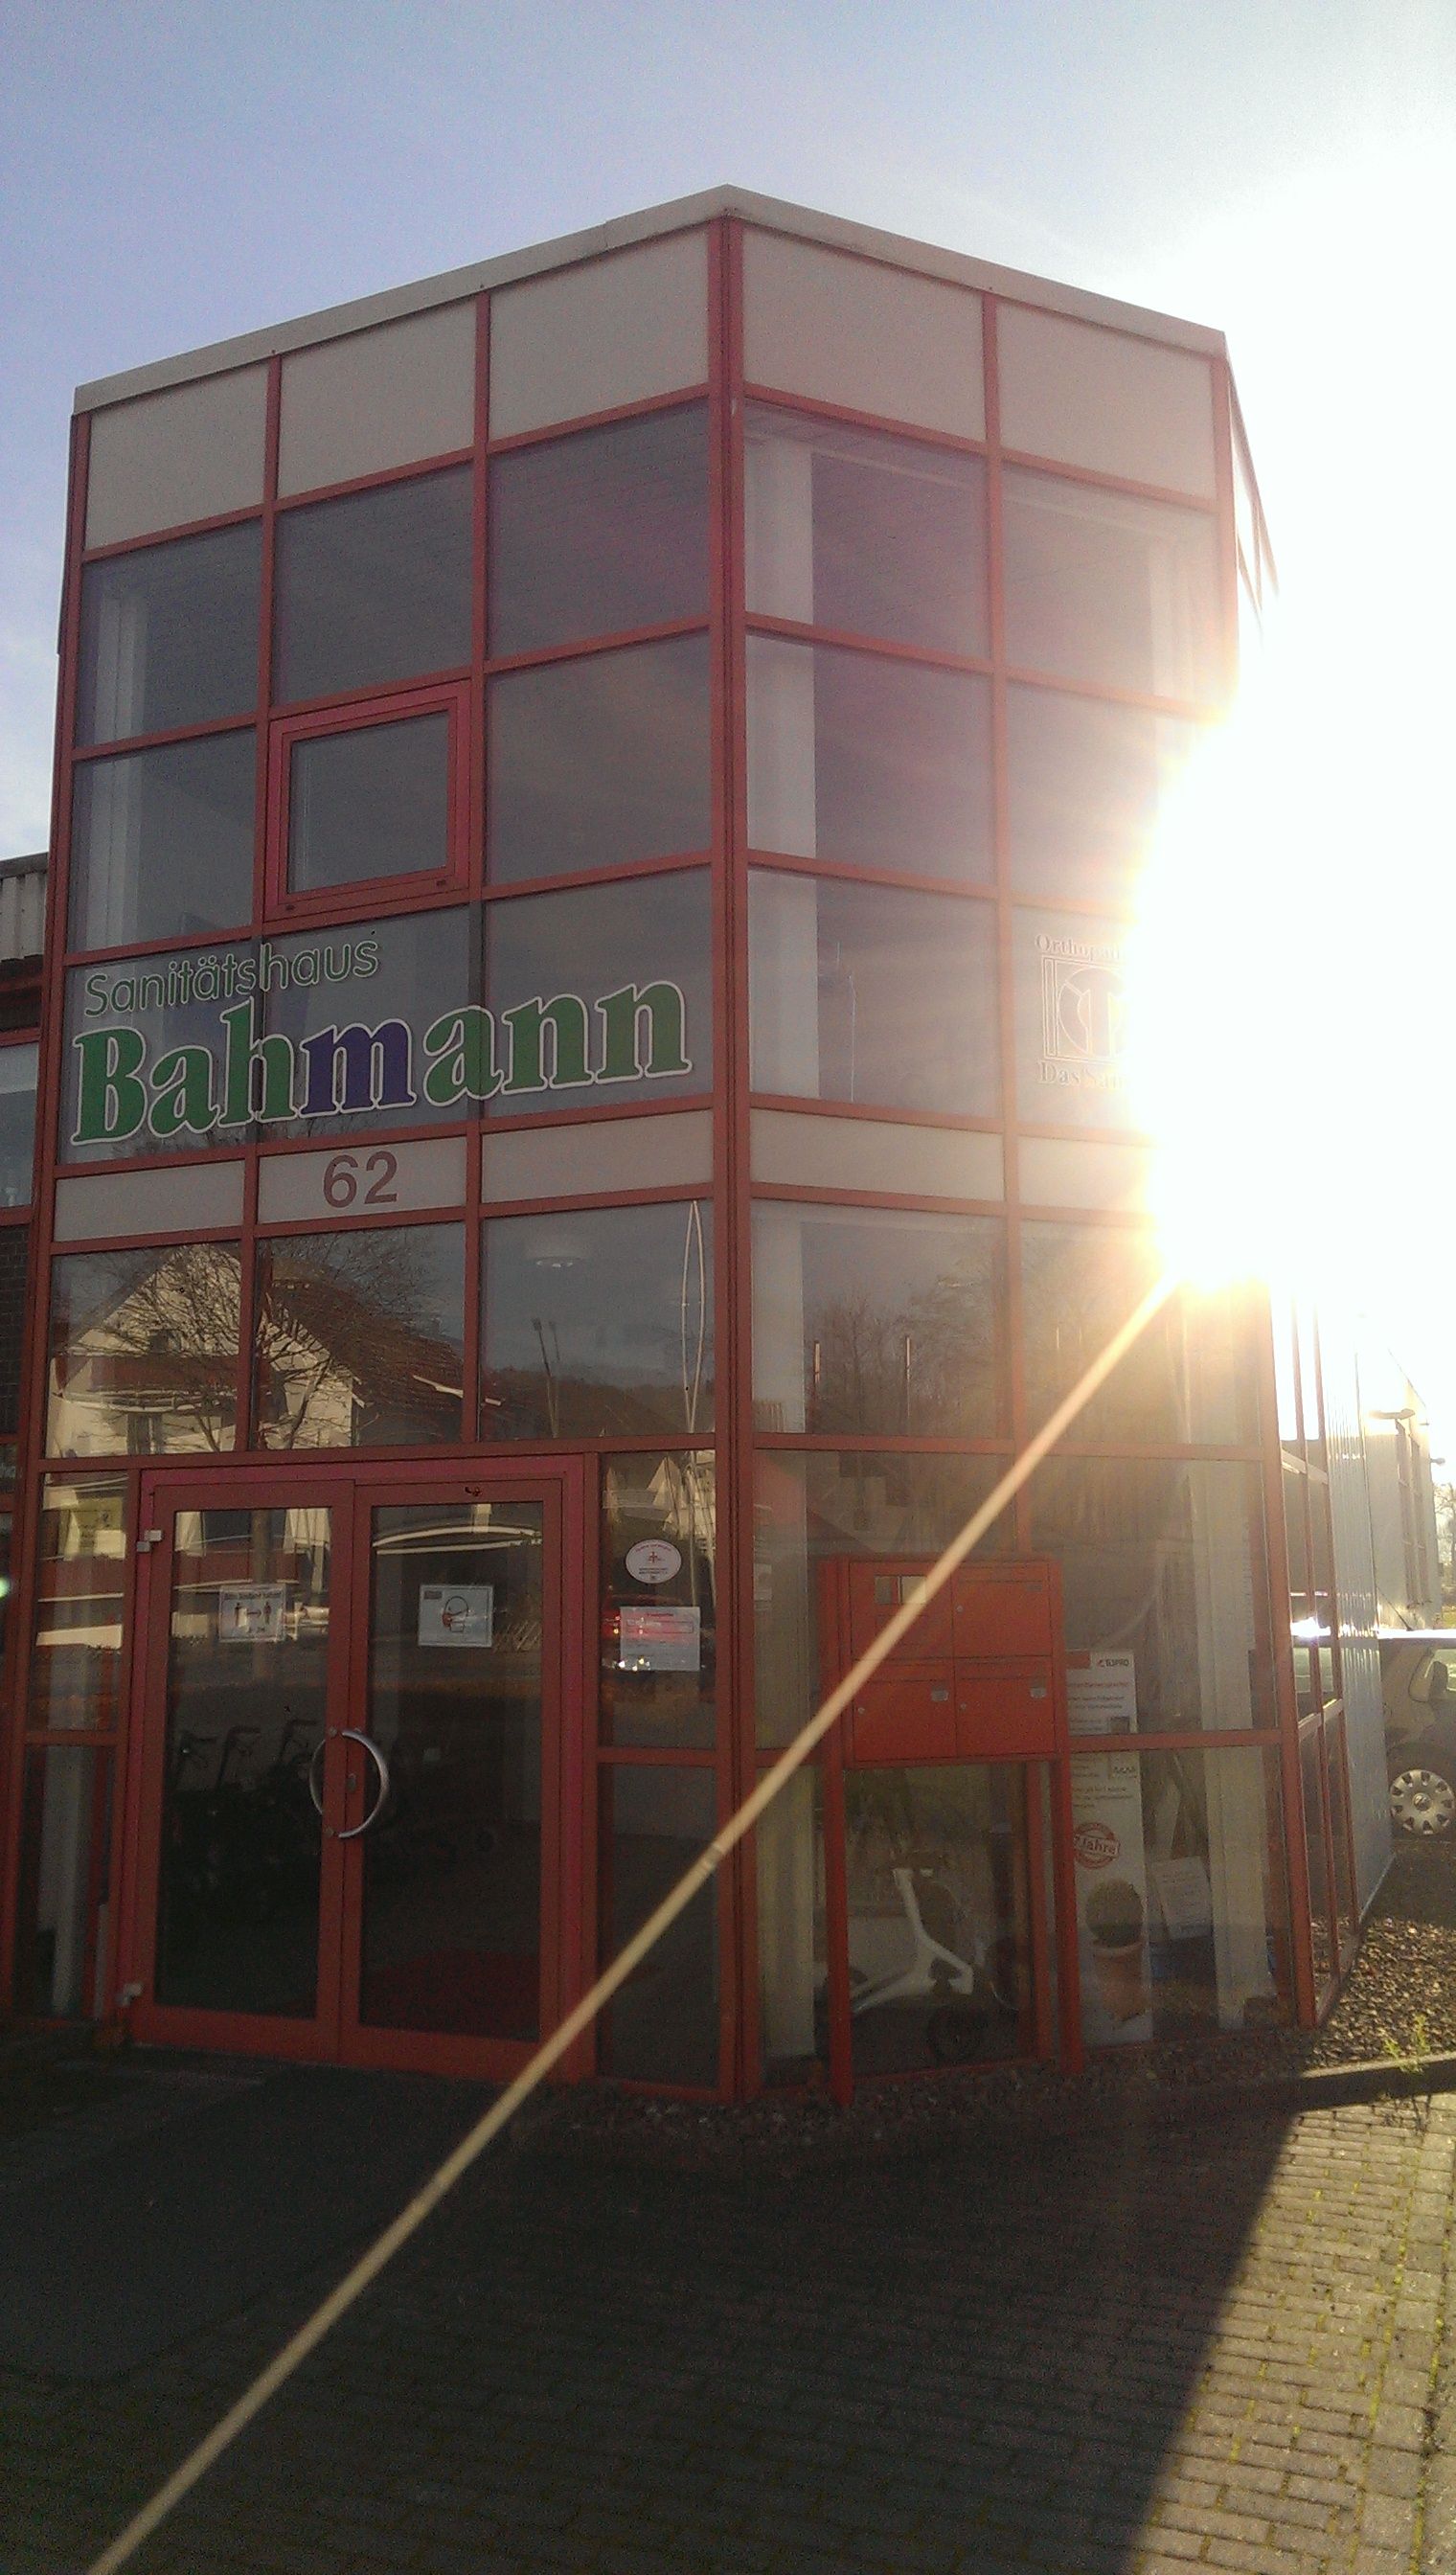 Sanitätshaus Bahmann - Über Uns | Bahmann